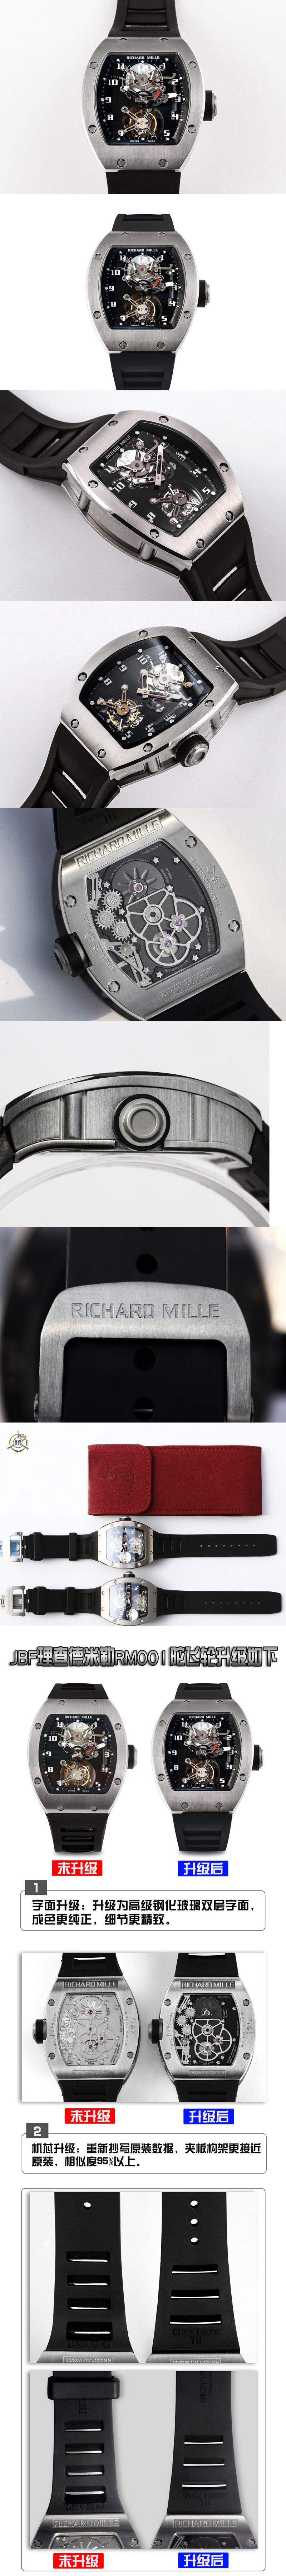 Replica Richard Mille RM001 Tourbillon SS JBF Best Edition Black Dial on Black Leather Strap